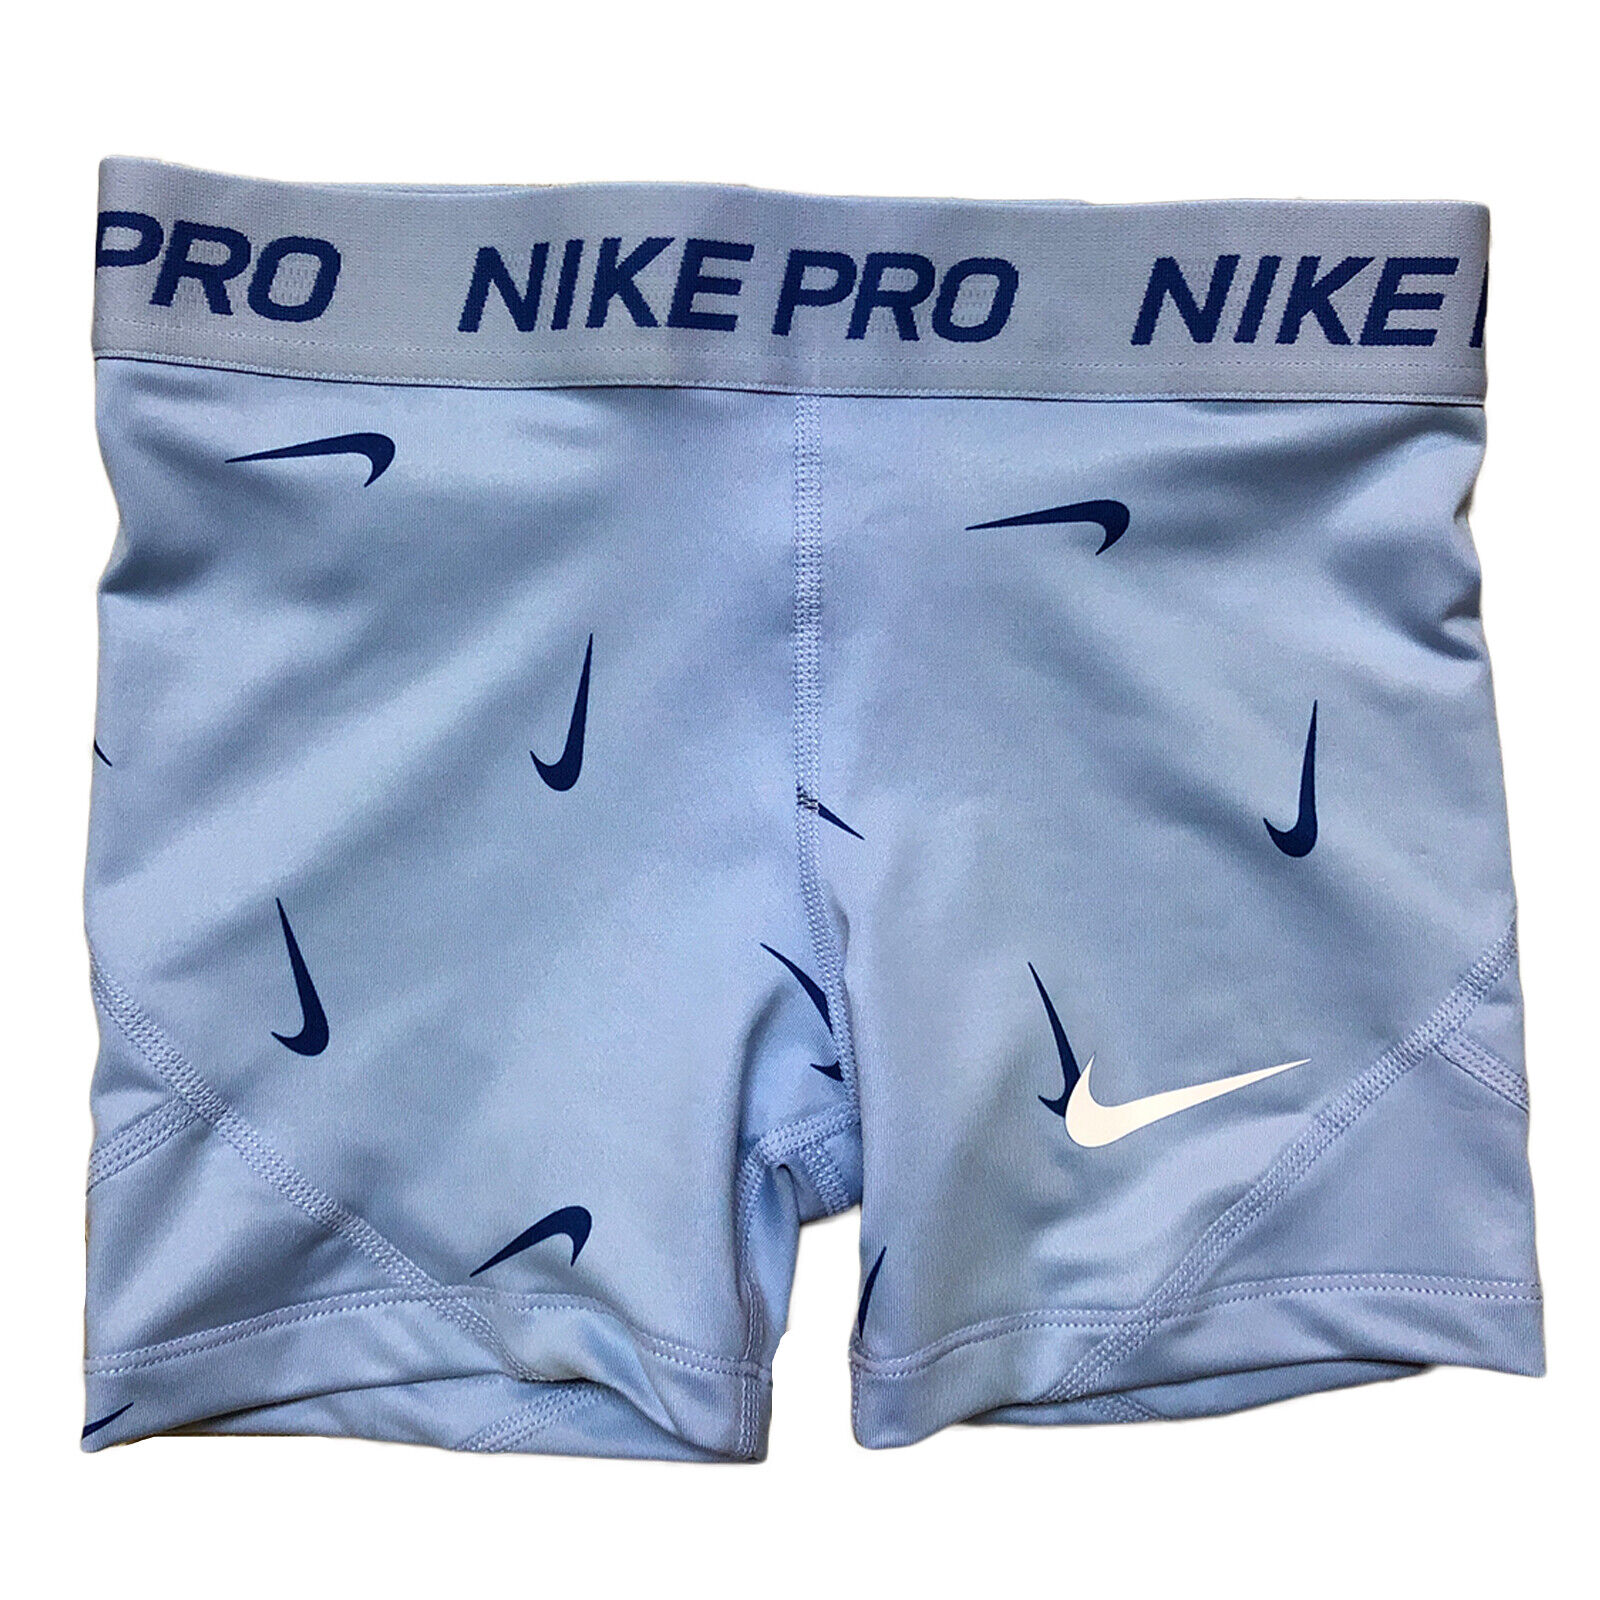 nike pro compression shorts girls